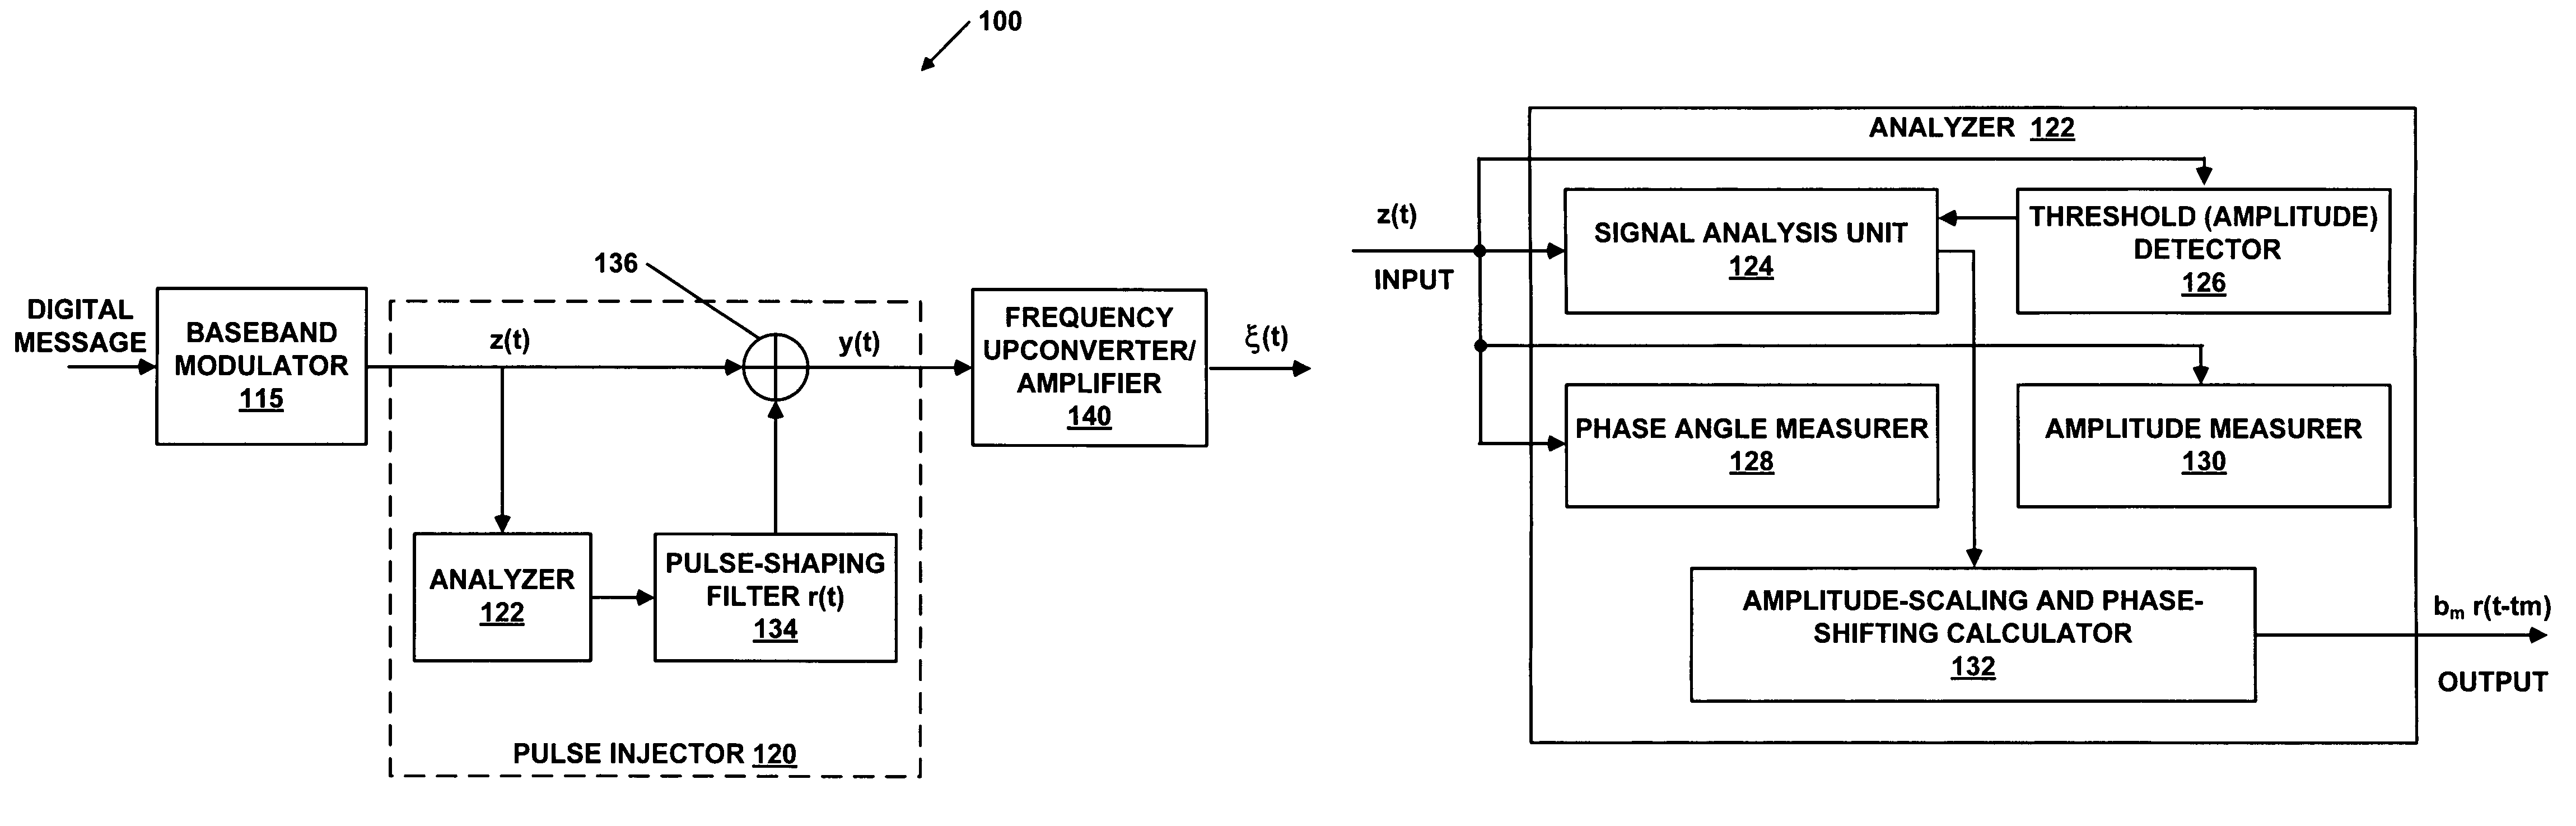 Methods and apparatus for reducing peak-to-RMS amplitude ratio in communication signals